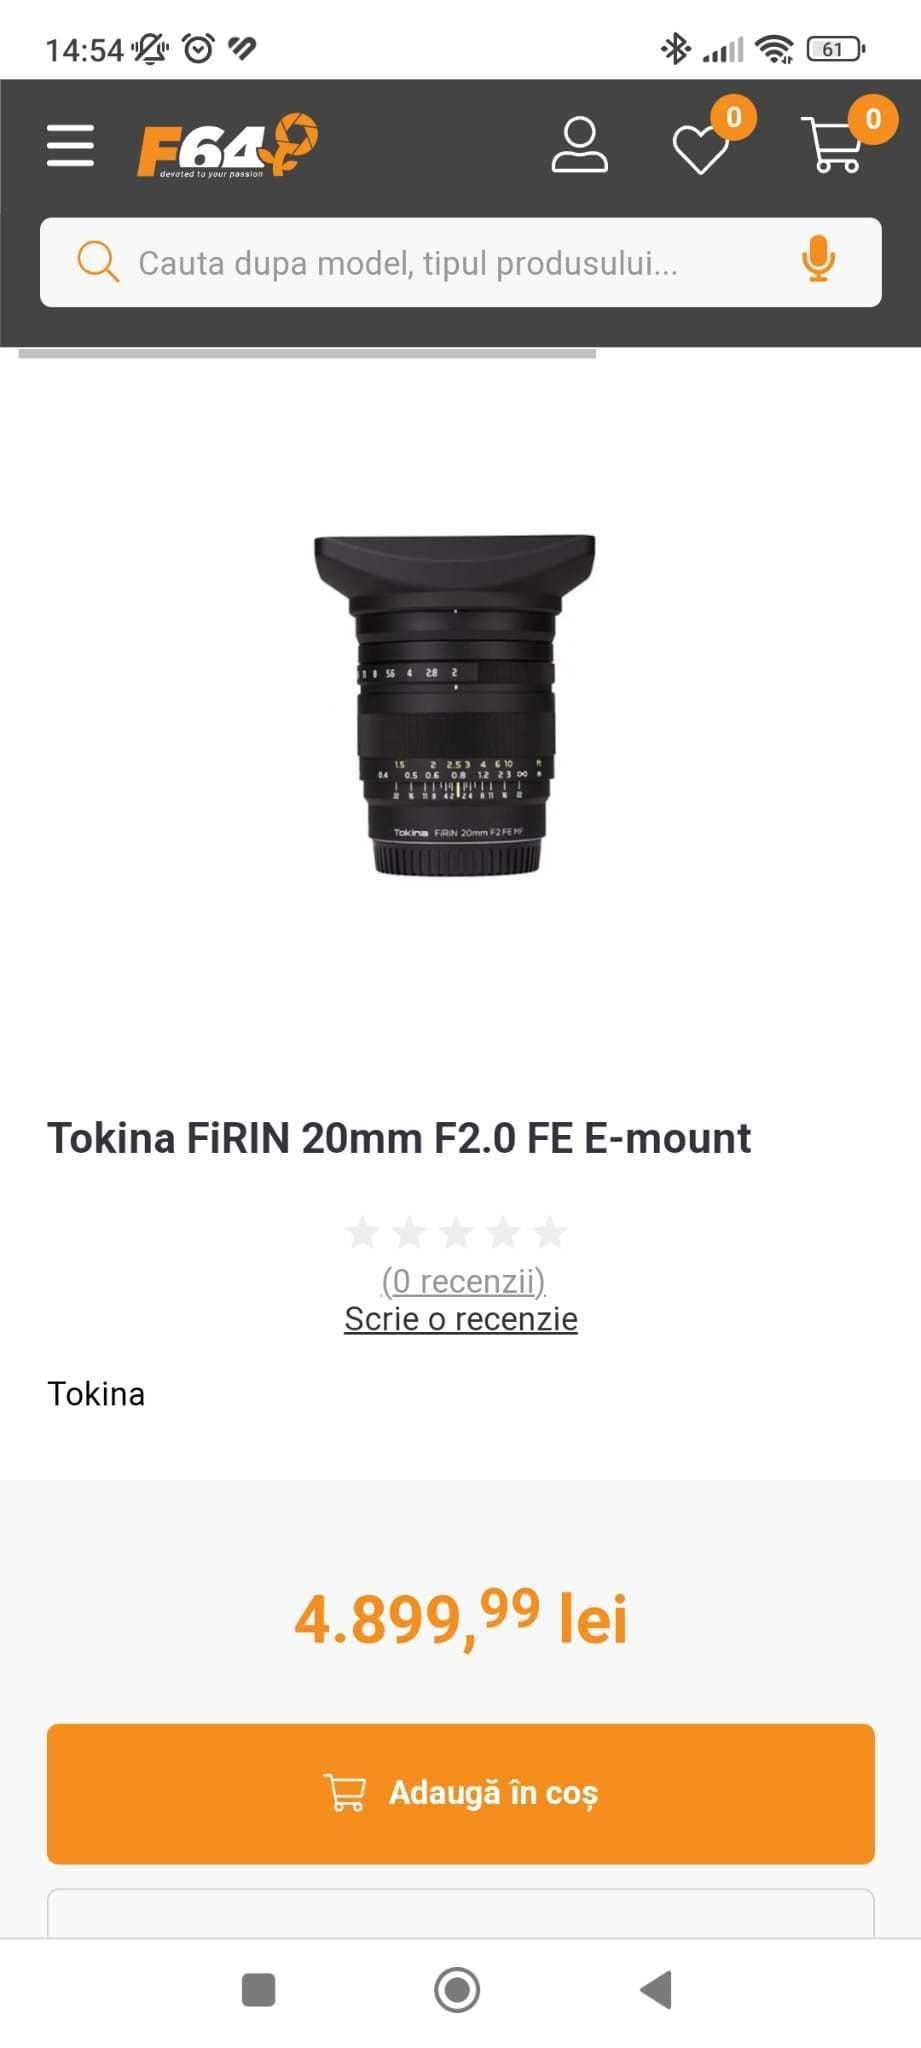 Tokina FiRIN  Sony 20mm F2.0 FE E-mount